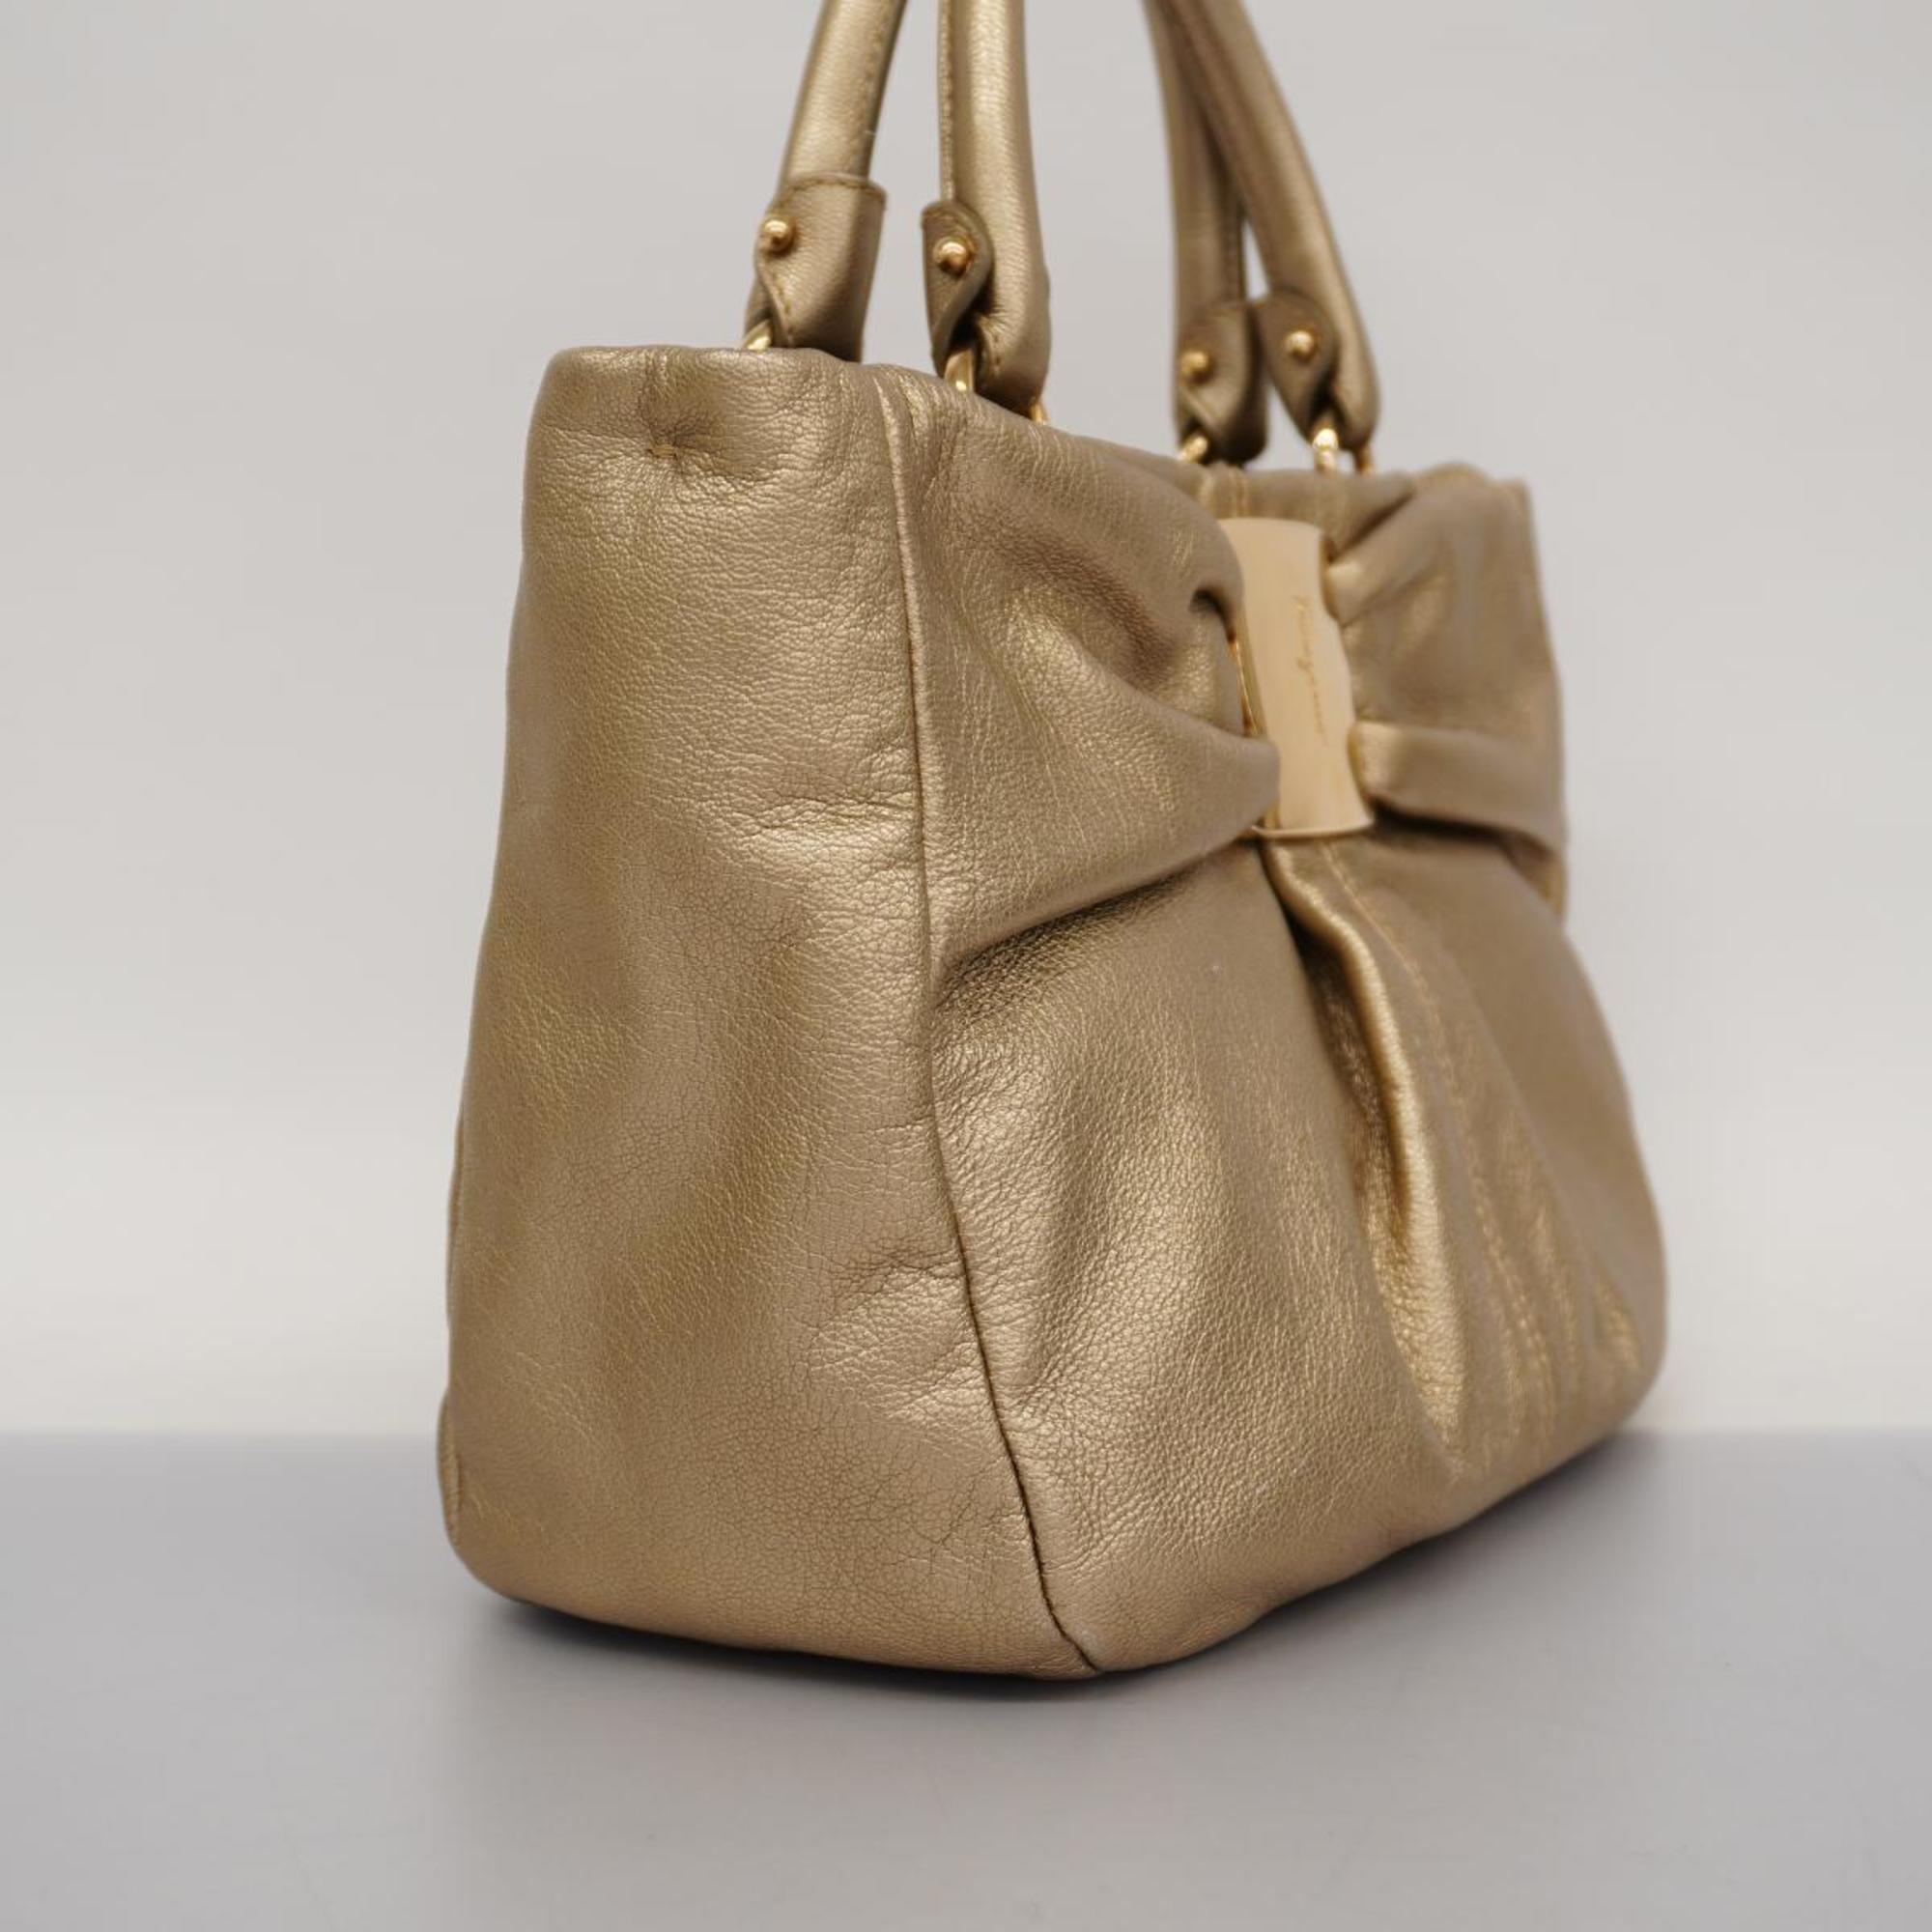 Salvatore Ferragamo handbag Vara leather champagne gold for women